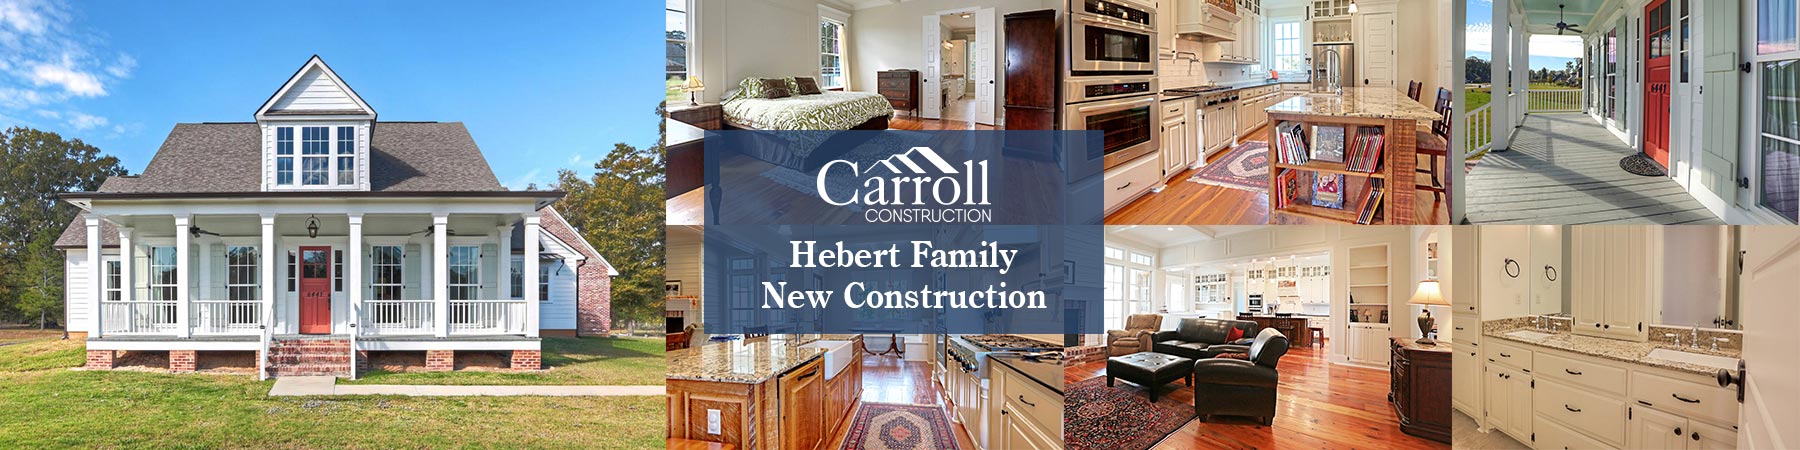 New Construction for the Hebert Family | Carroll Construction